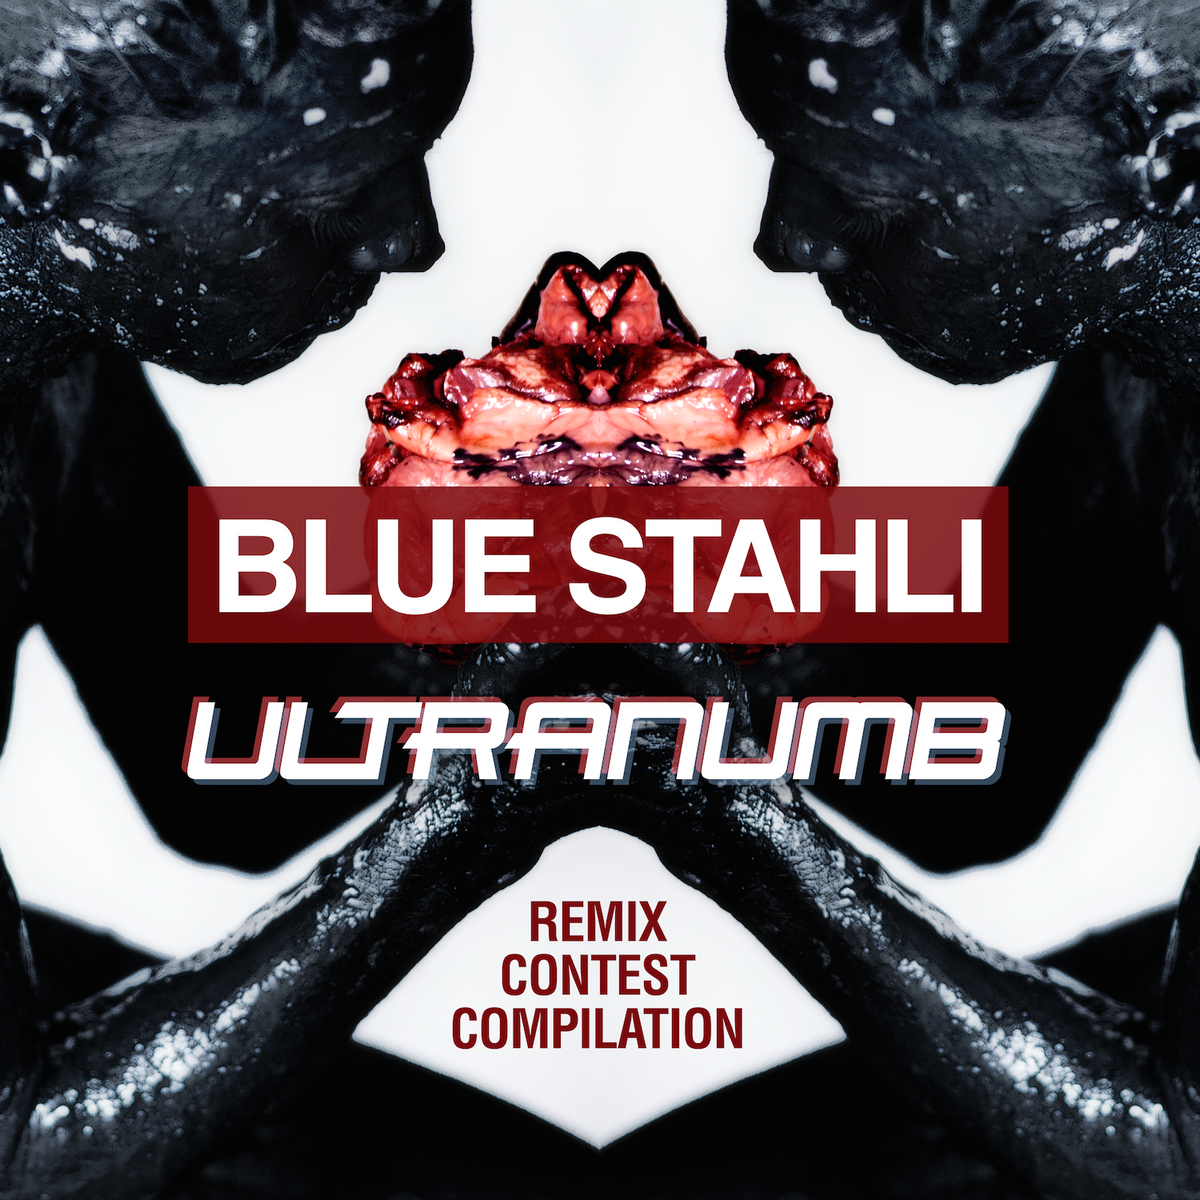 blue stahli ultranumb remix compilation